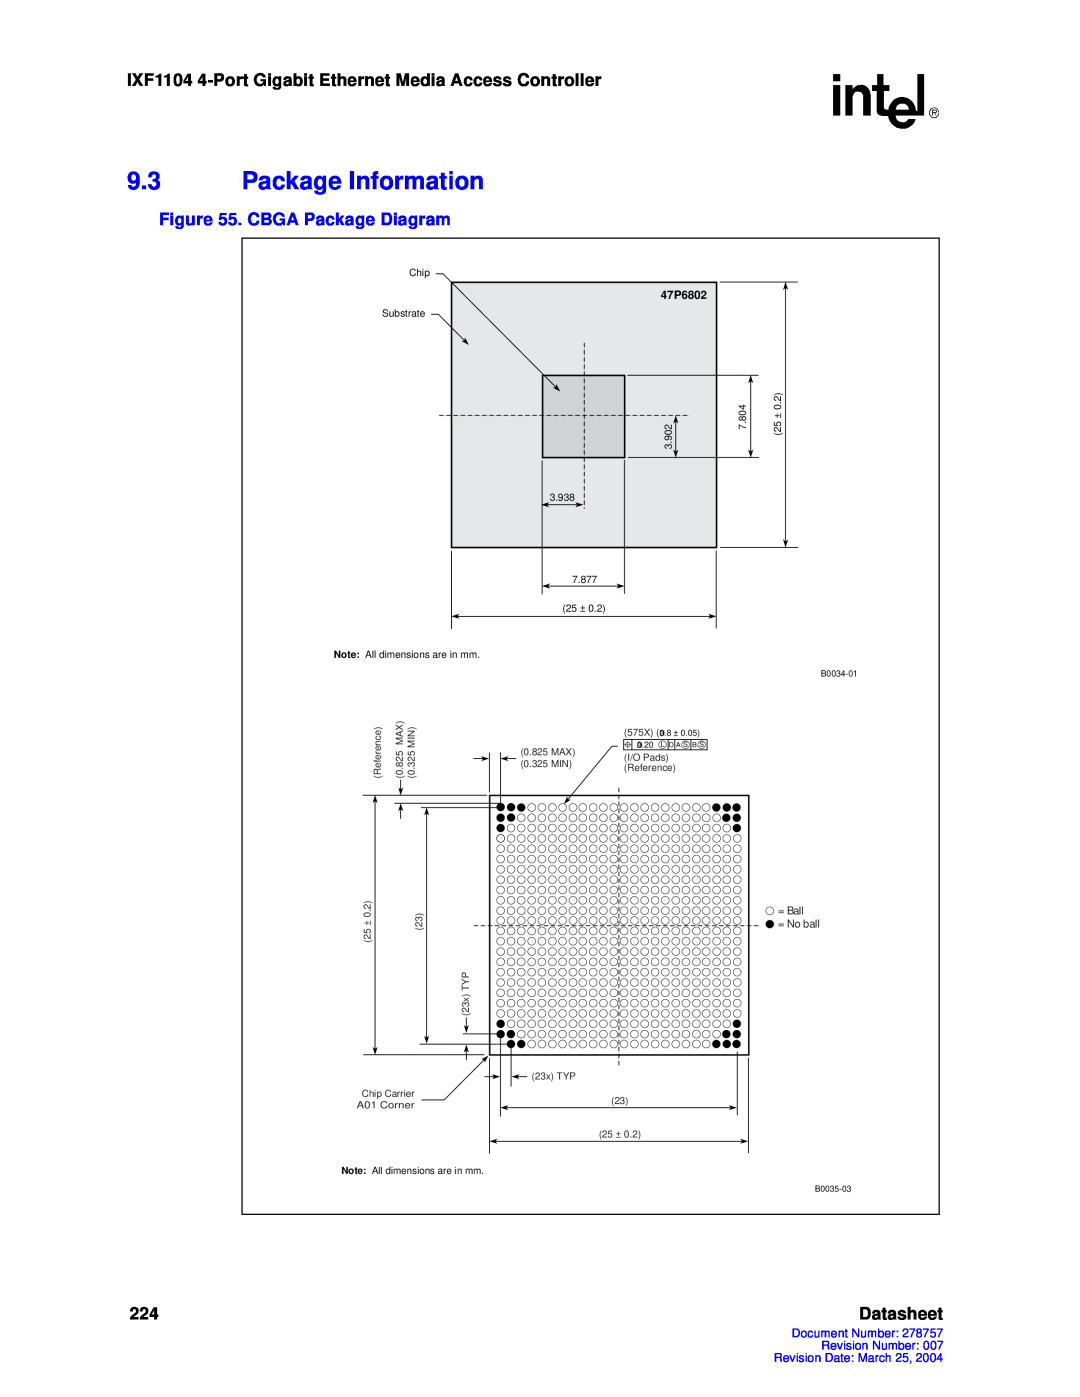 Intel IXF1104 manual 9.3Package Information, Datasheet, = Ball, = No ball 